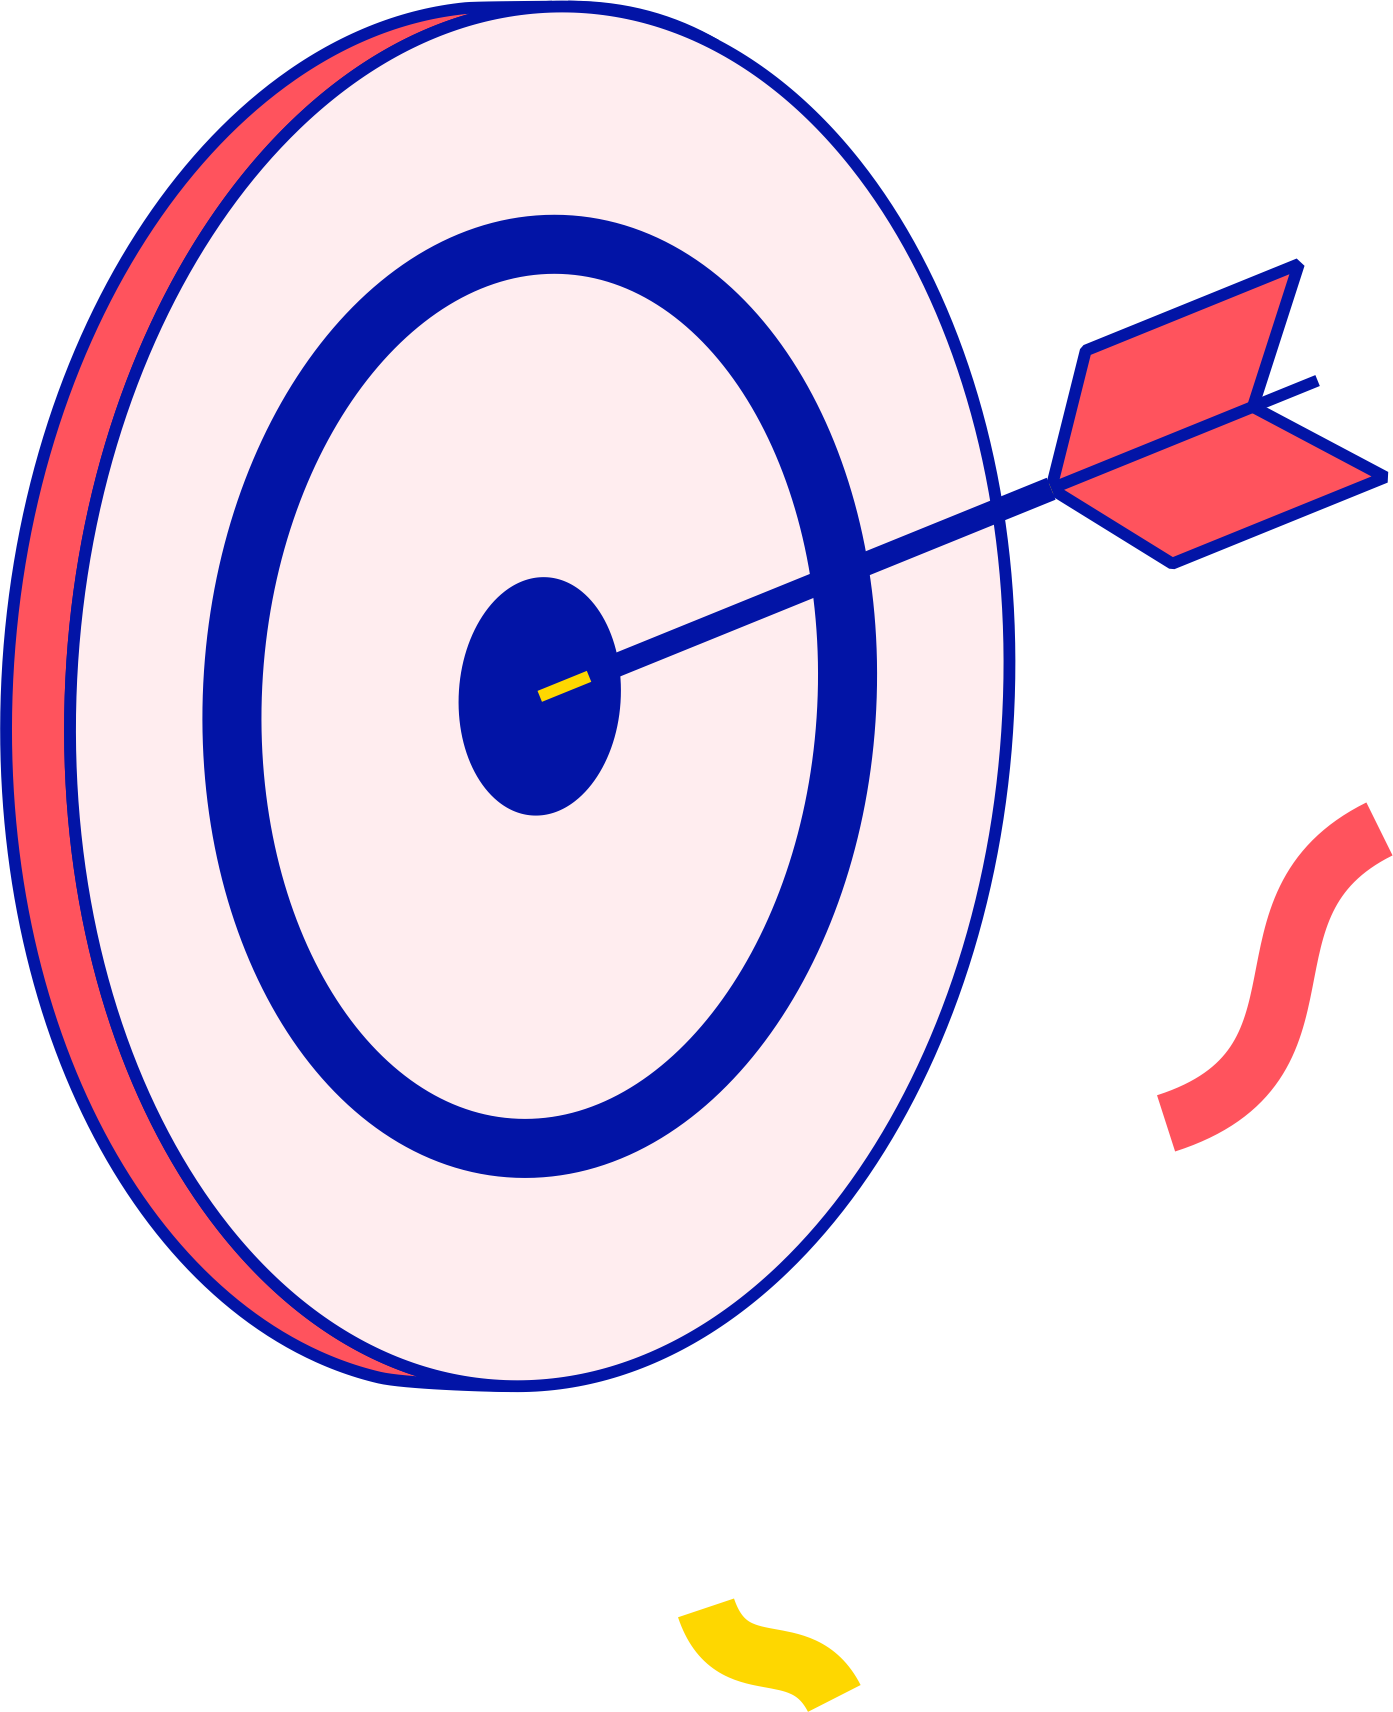 Bull's-eye dart symbolizing a successful marketing plan